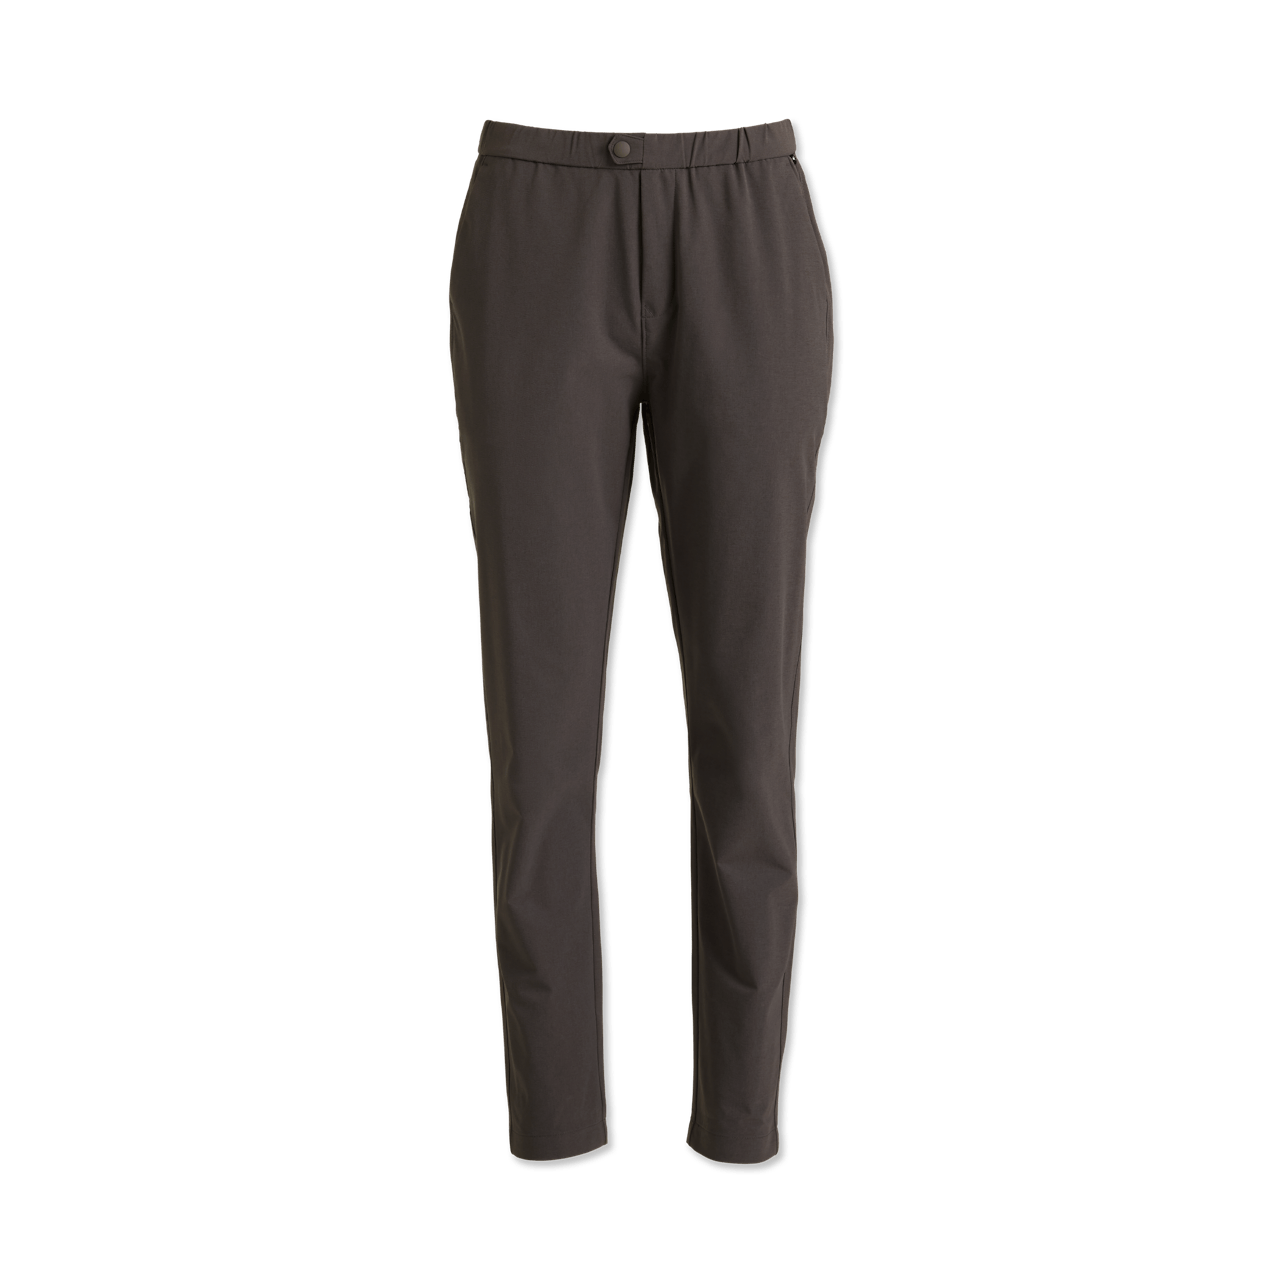 NWT Velocity Women's Travel Pants Black Size Large